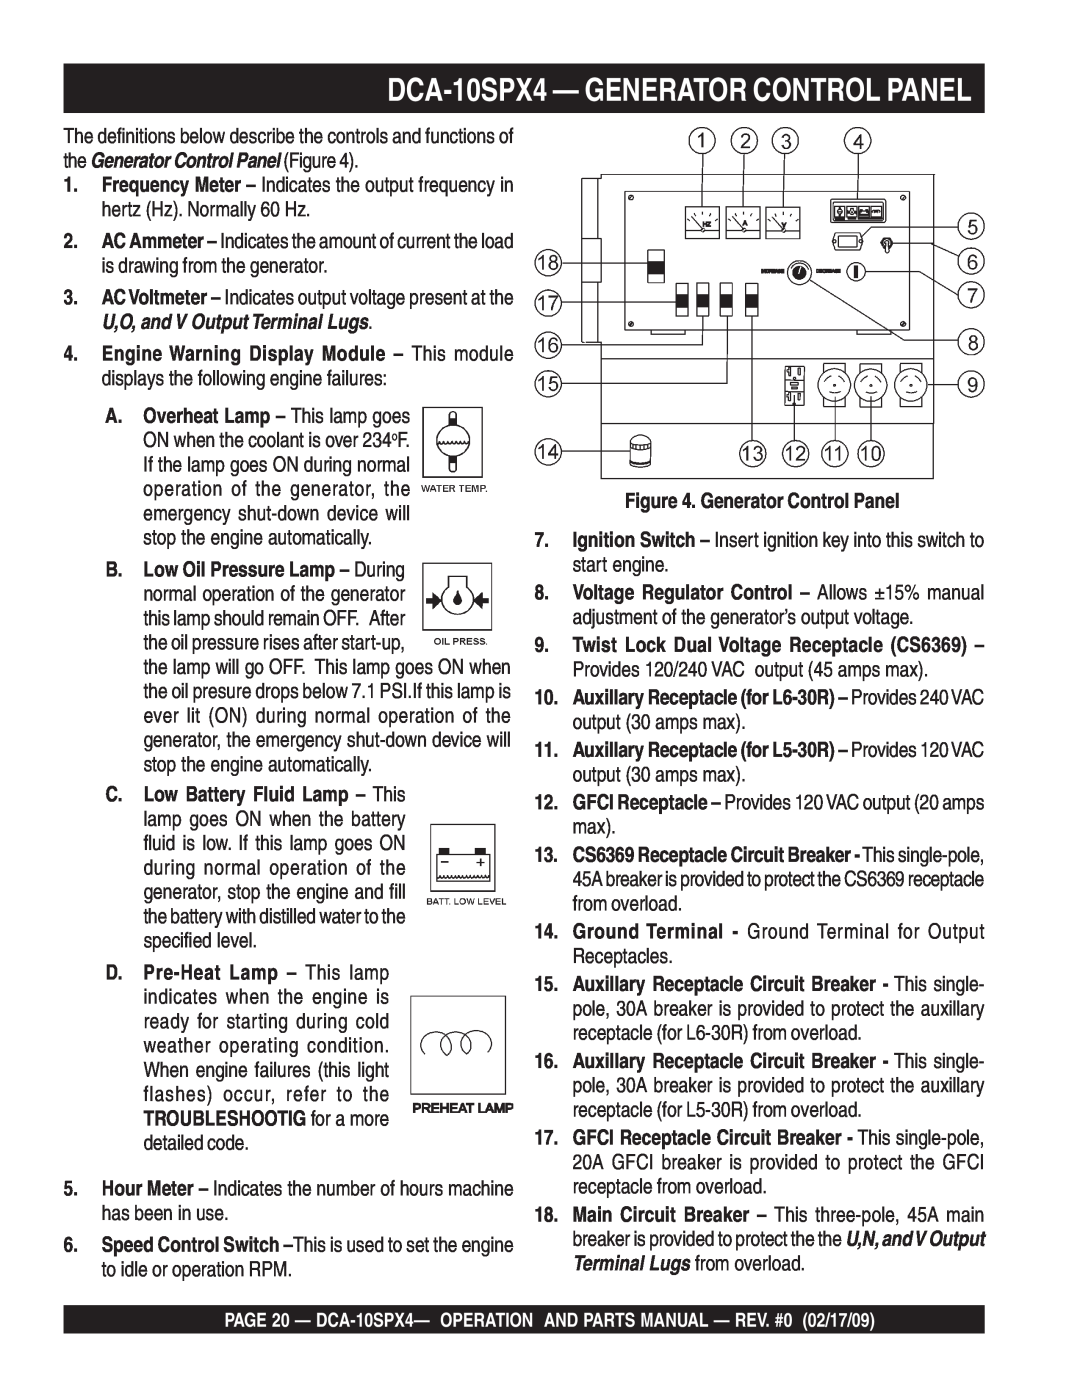 Multiquip operation manual DCA-10SPX4 - GENERATOR CONTROL PANEL, Generator Control Panel 